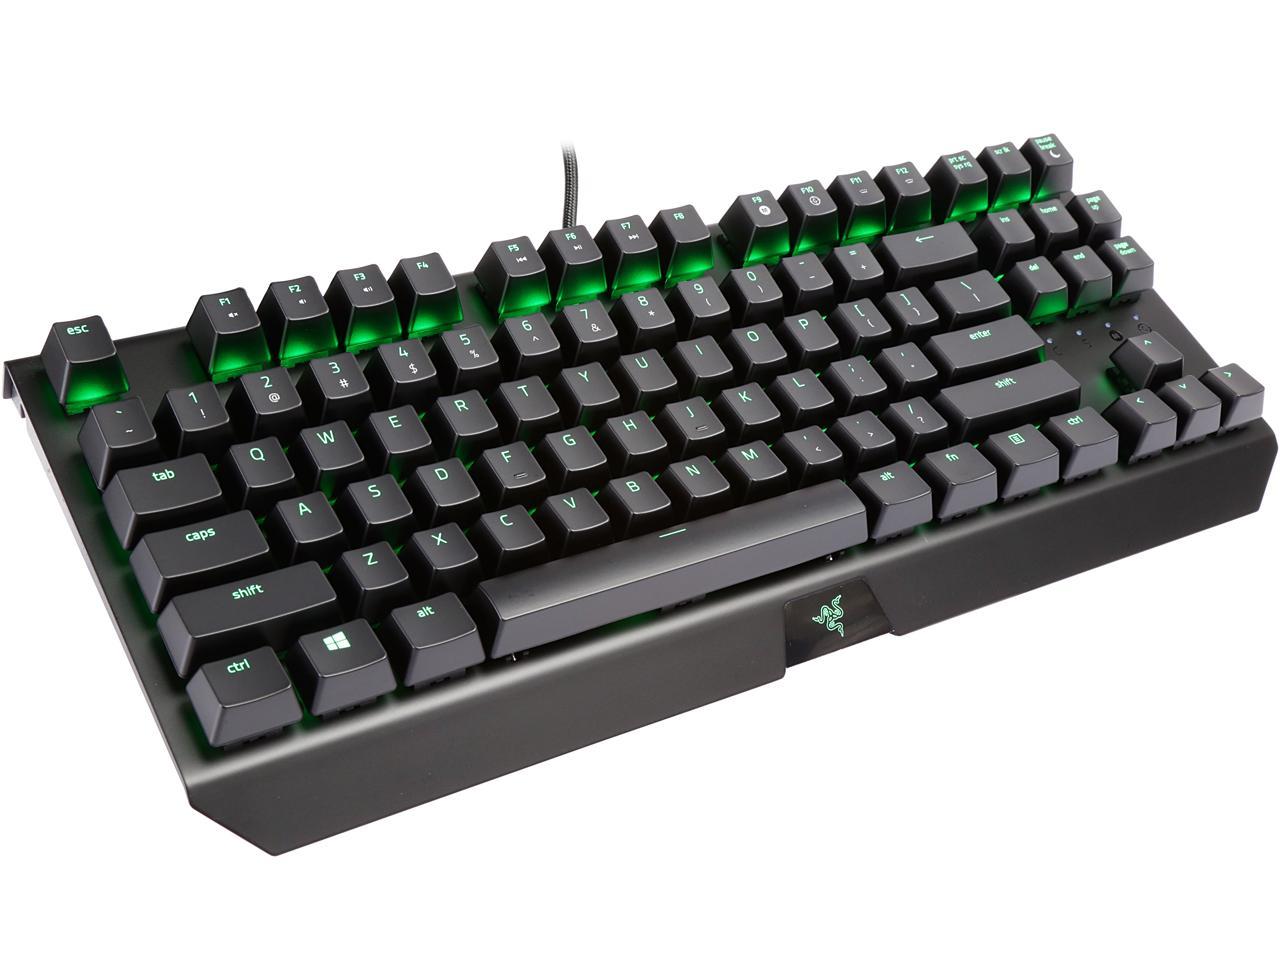 Razer Blackwidow X Tournament Edition Chroma Rgb Mechanical Gaming Keyboard With Military Grade Metal Construction And Compact Layout Newegg Com